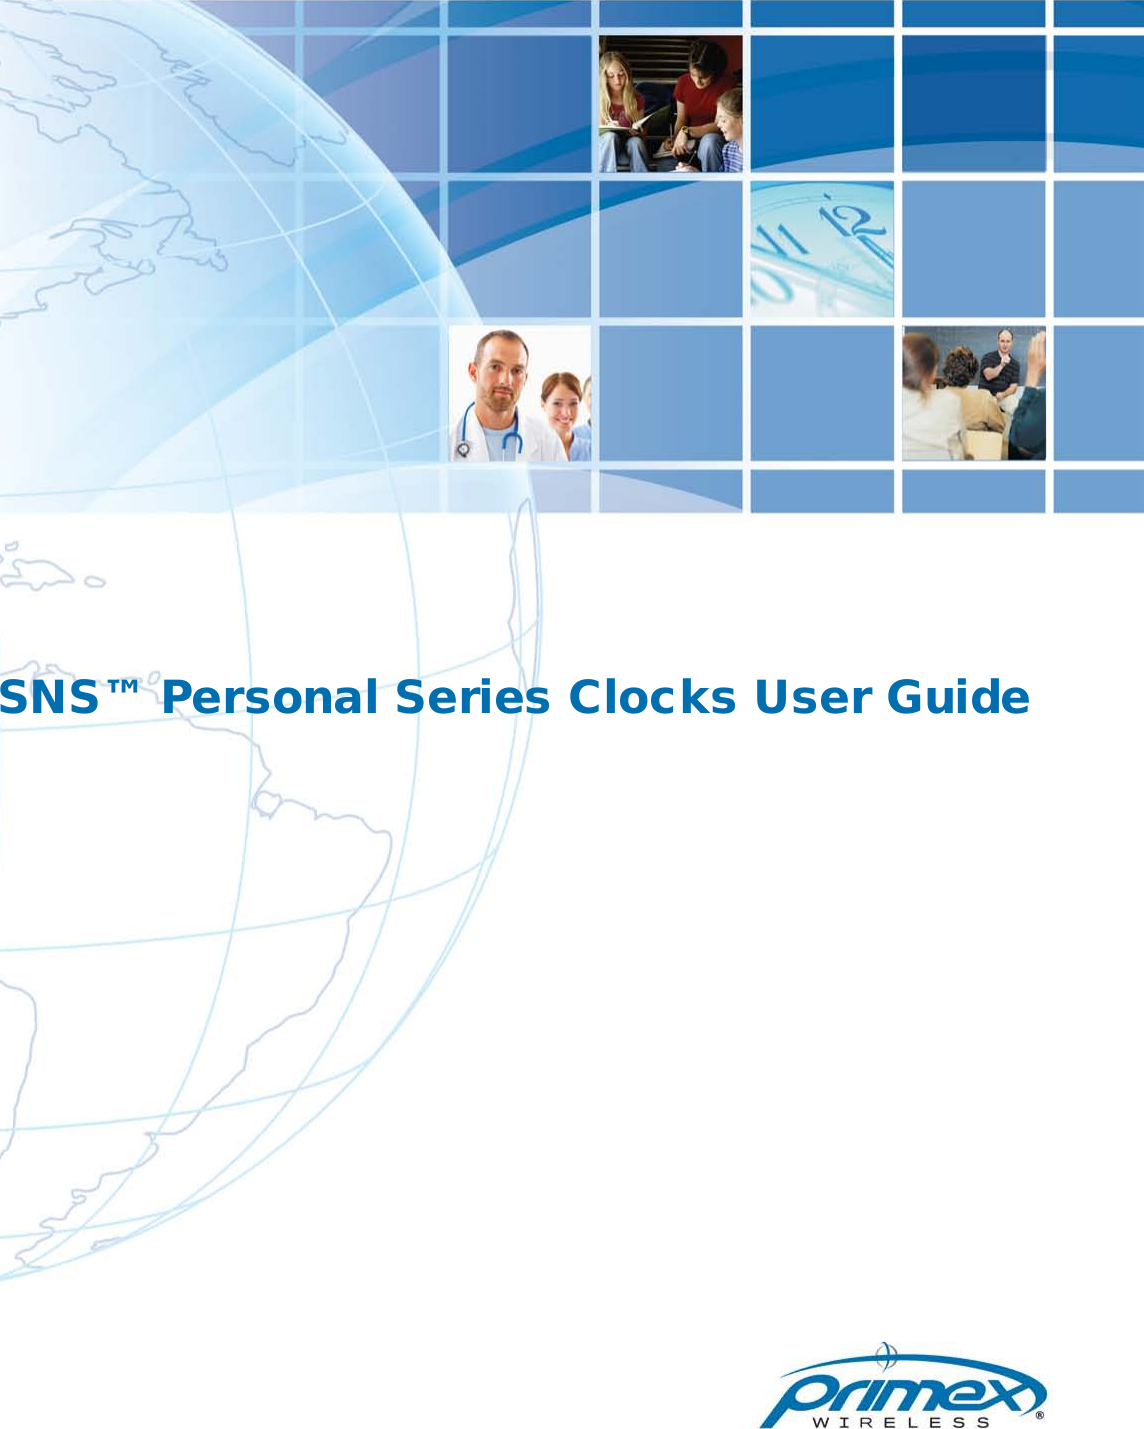  SNS™ Personal Series Clocks User Guide 